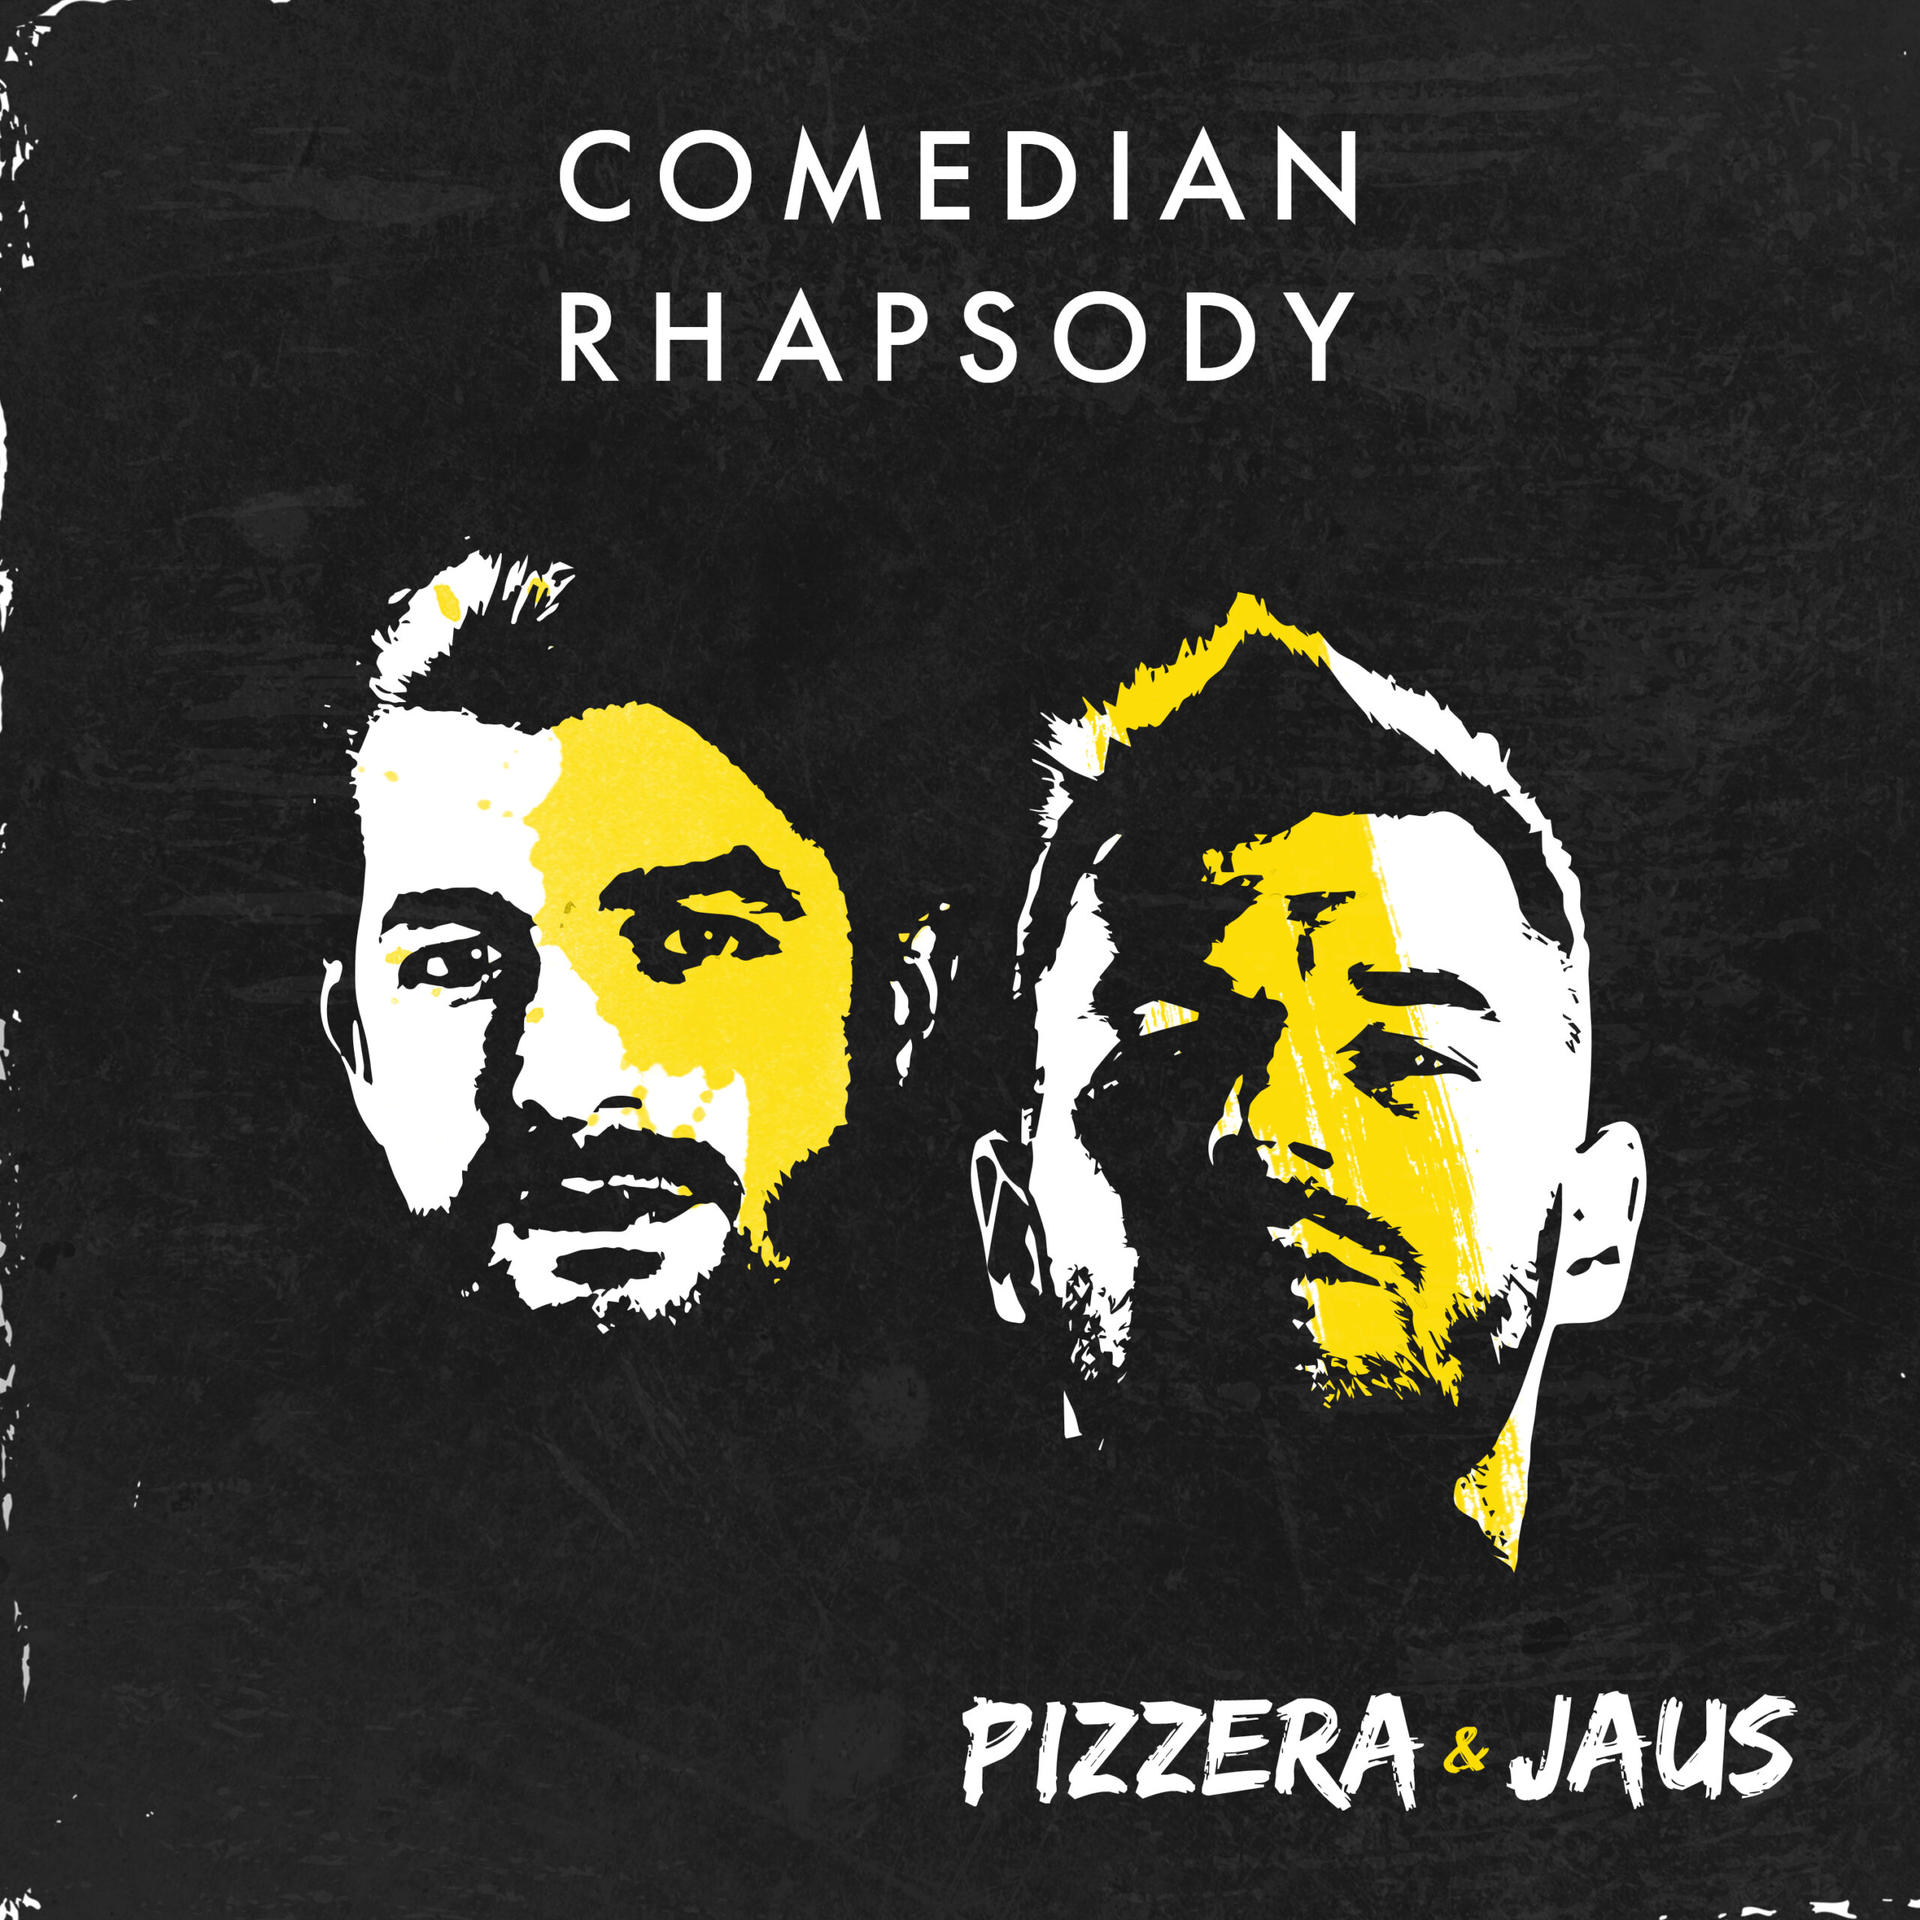 Pizzera & Rhapsody - Jaus (CD) Comedian 